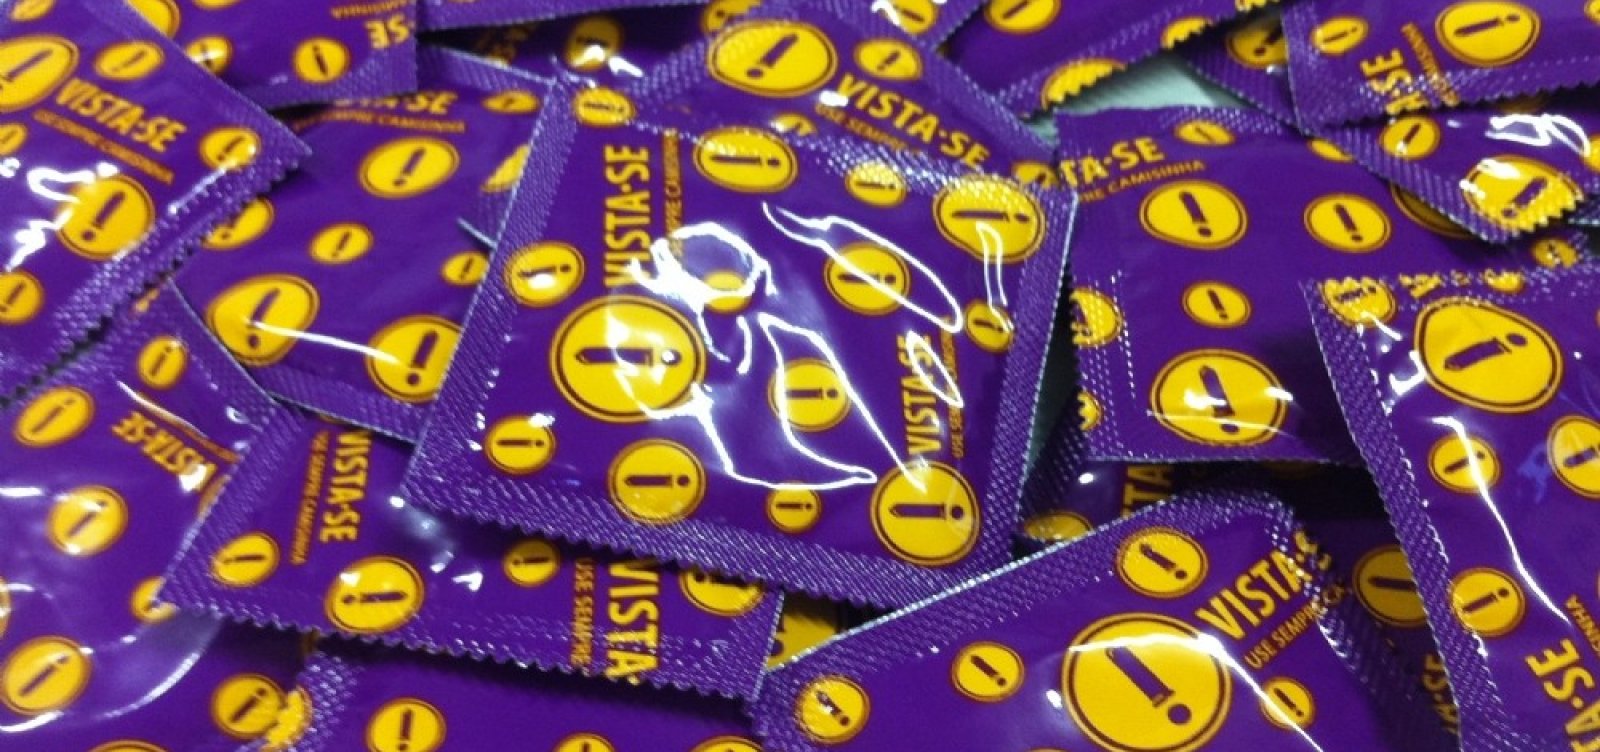 ONU alerta para escassez de preservativos durante pandemia do coronavírus